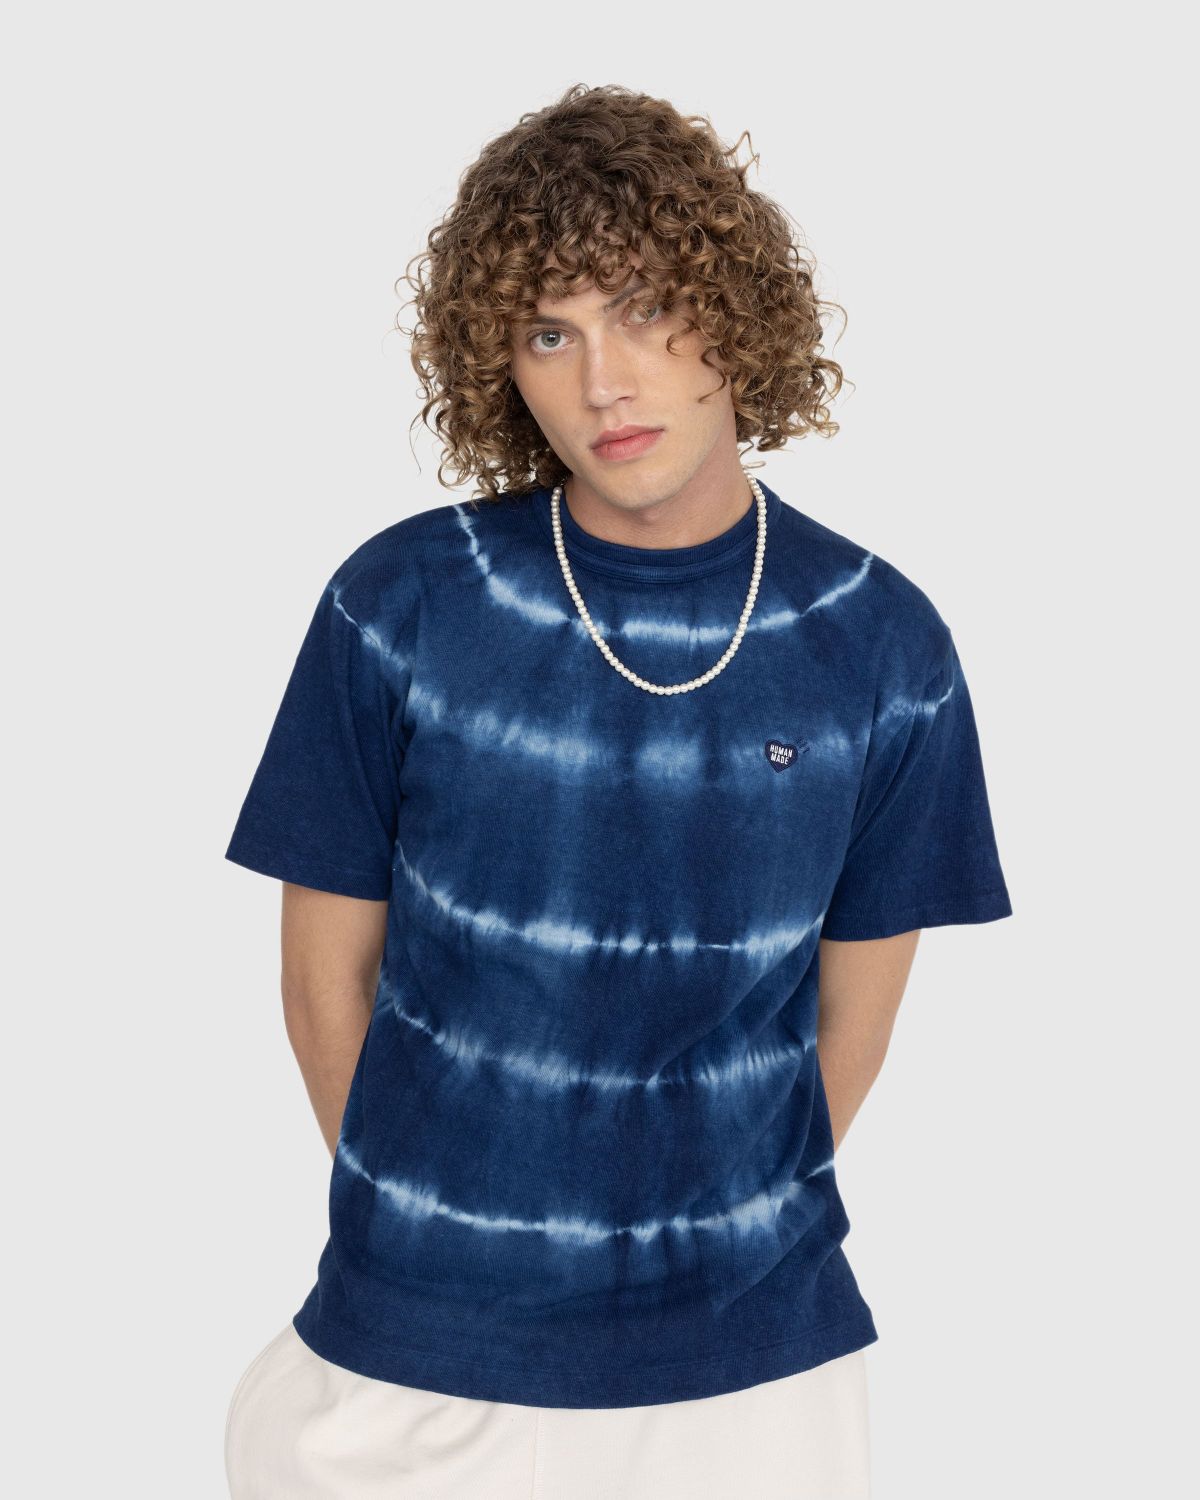 Indigo – Ningen-sei Made | Highsnobiety Blue T-Shirt #1 Human Dyed Shop